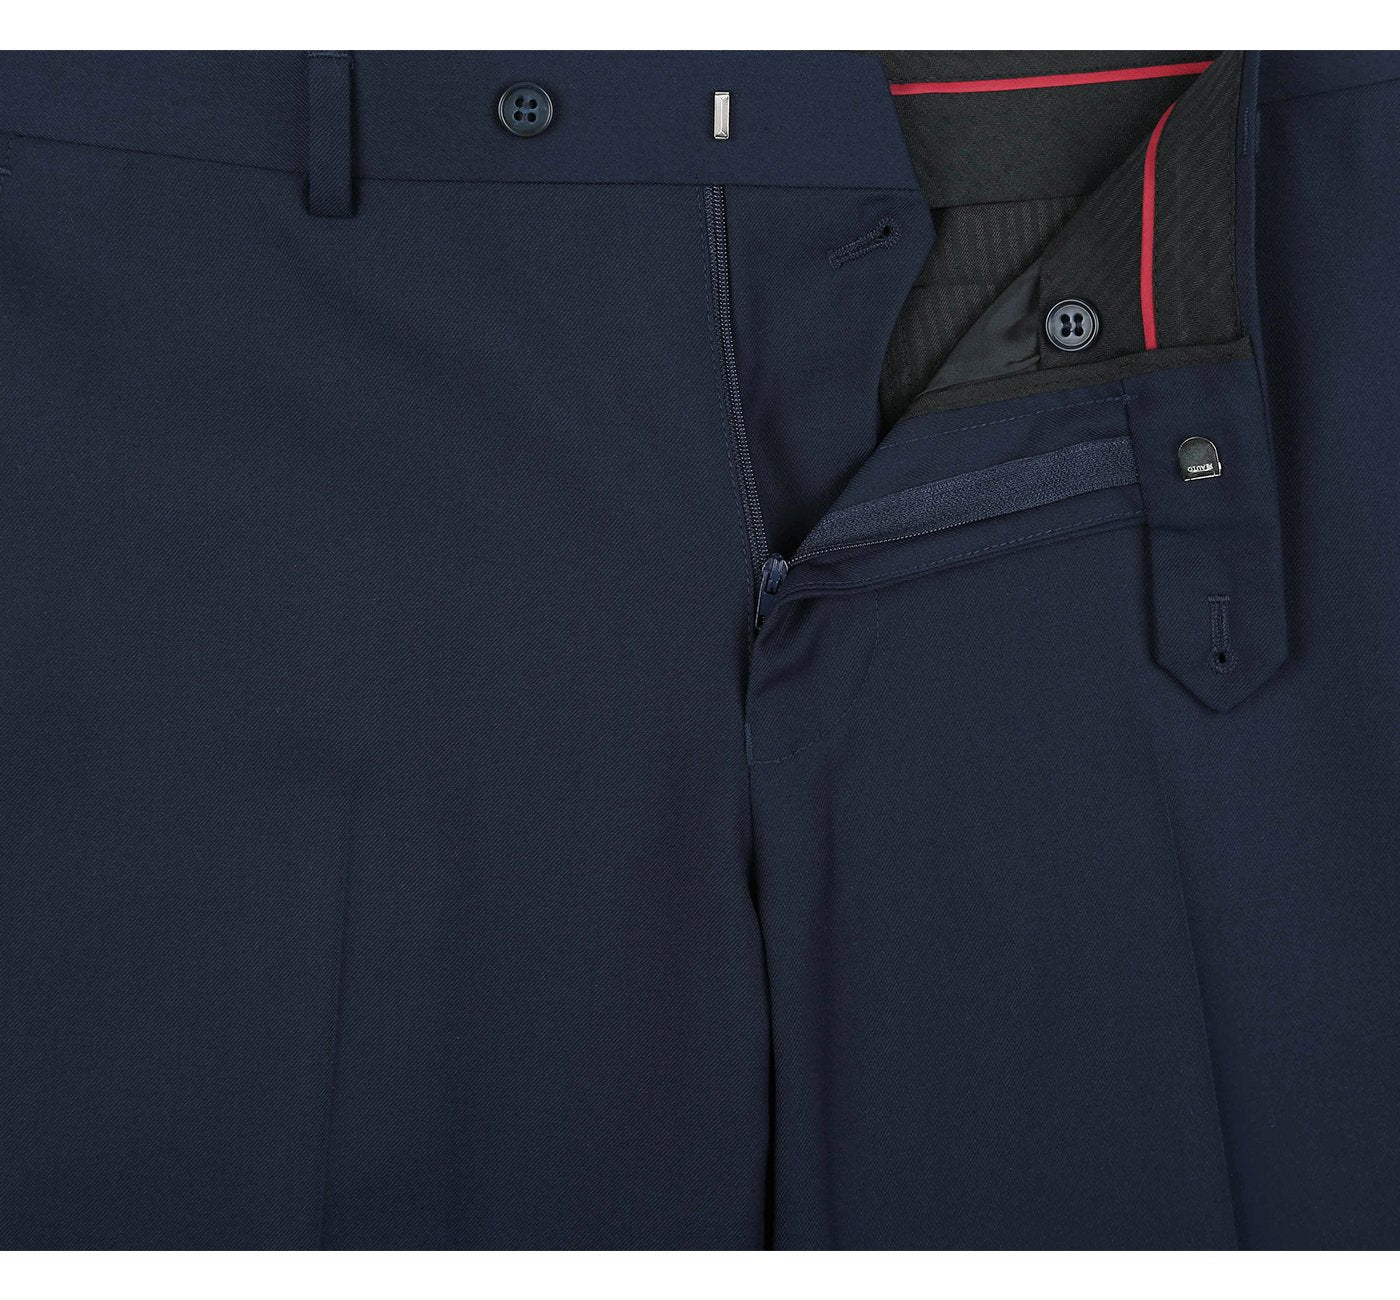 201-19 Men's Navy Blue 2-Piece Single Breasted Notch Lapel Suit